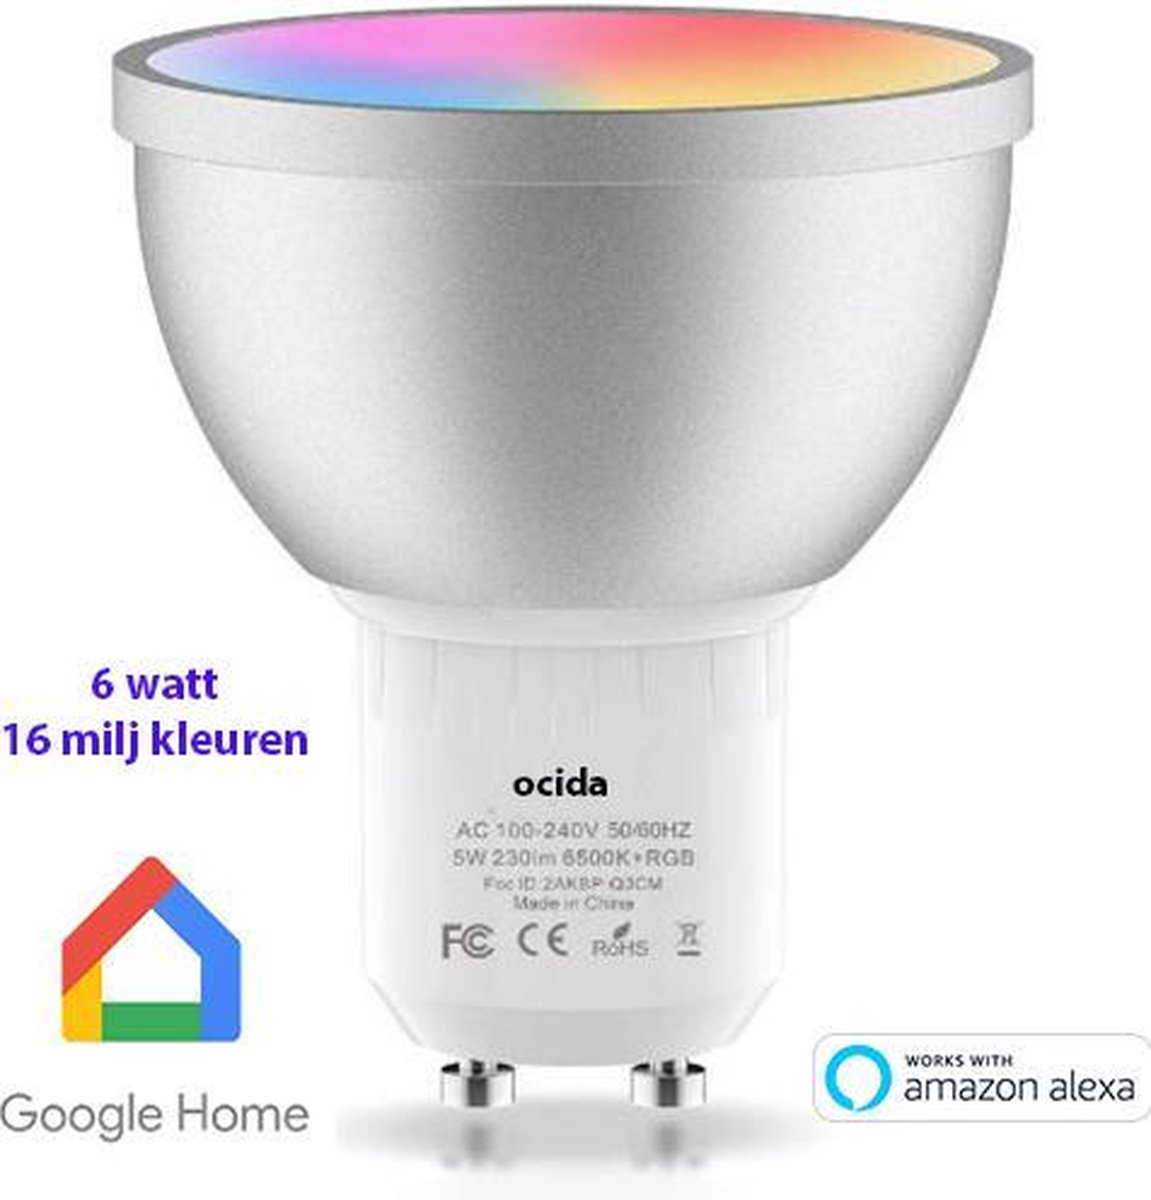 Toeval Vriend zondaar bol.com | Smart Bulb spot Led 5wat lamp GU10– GOOGLE HOME ALEXA 17miljoen  kleuren